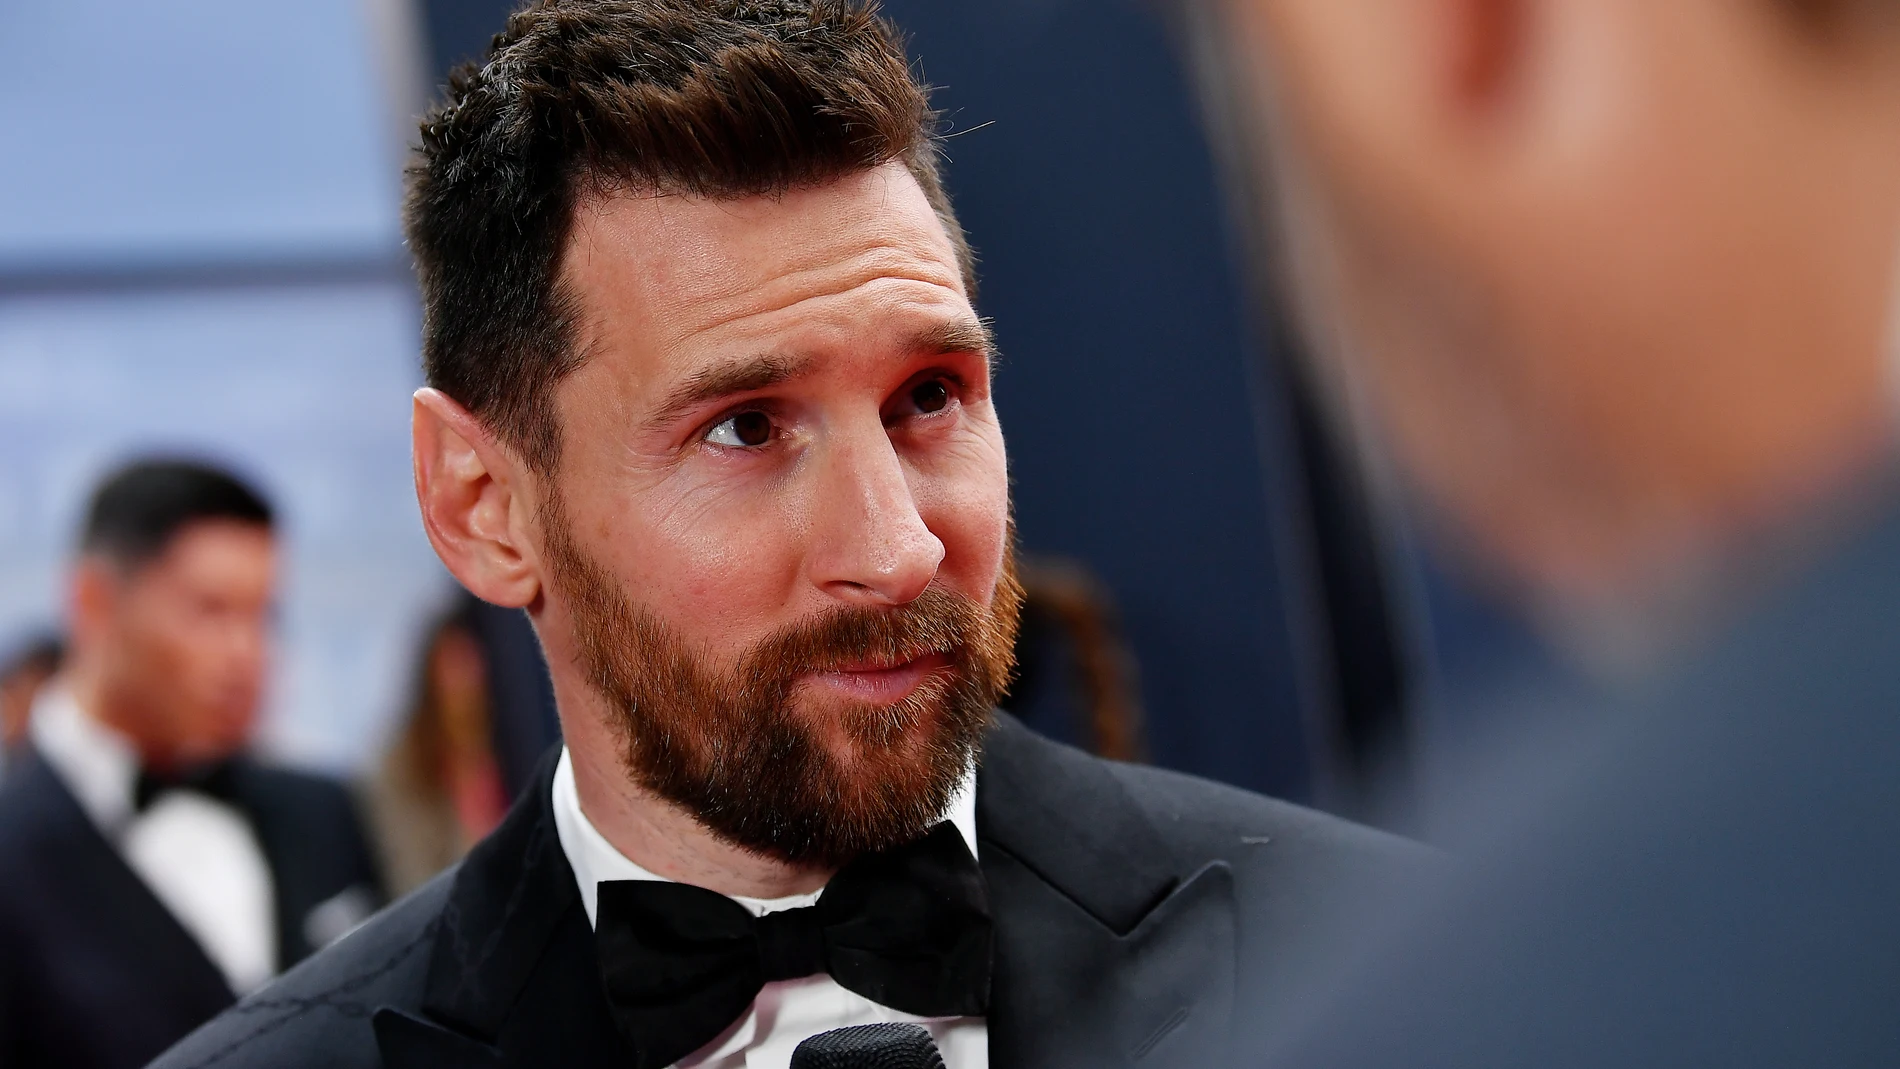 Leo Messi, en la alfombra roja de los Premios Laureus